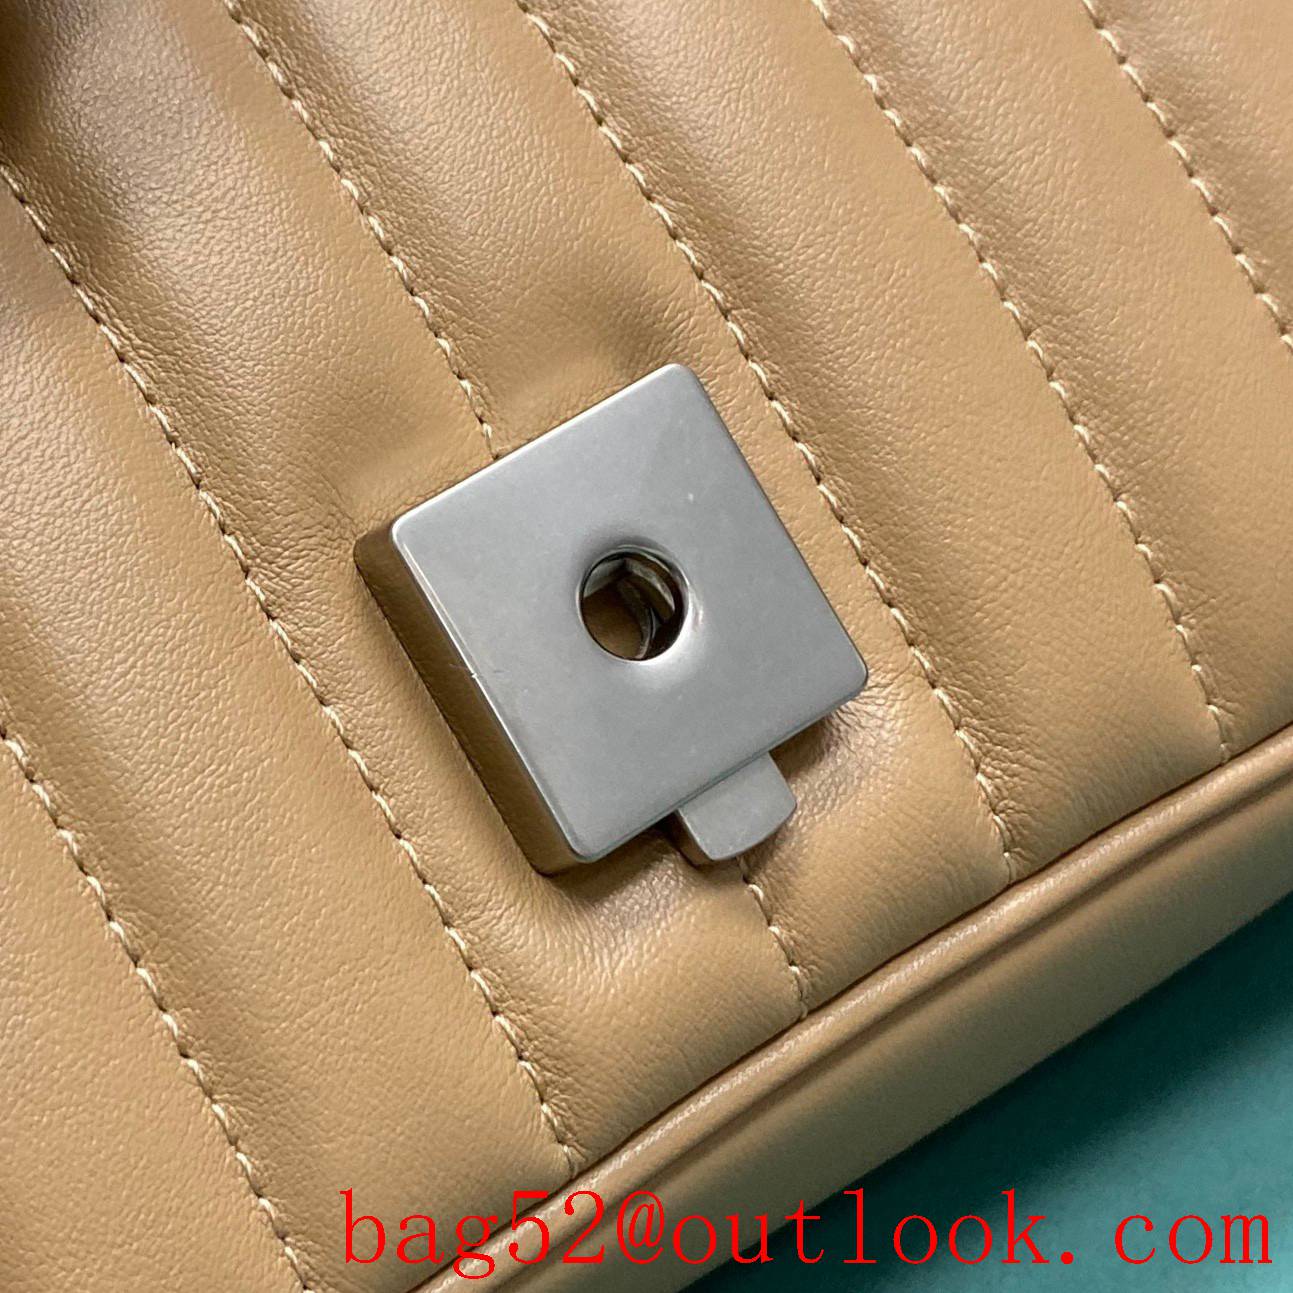 Gucci marmont medium Classic plaid mixed line connection brown women's chain handbag